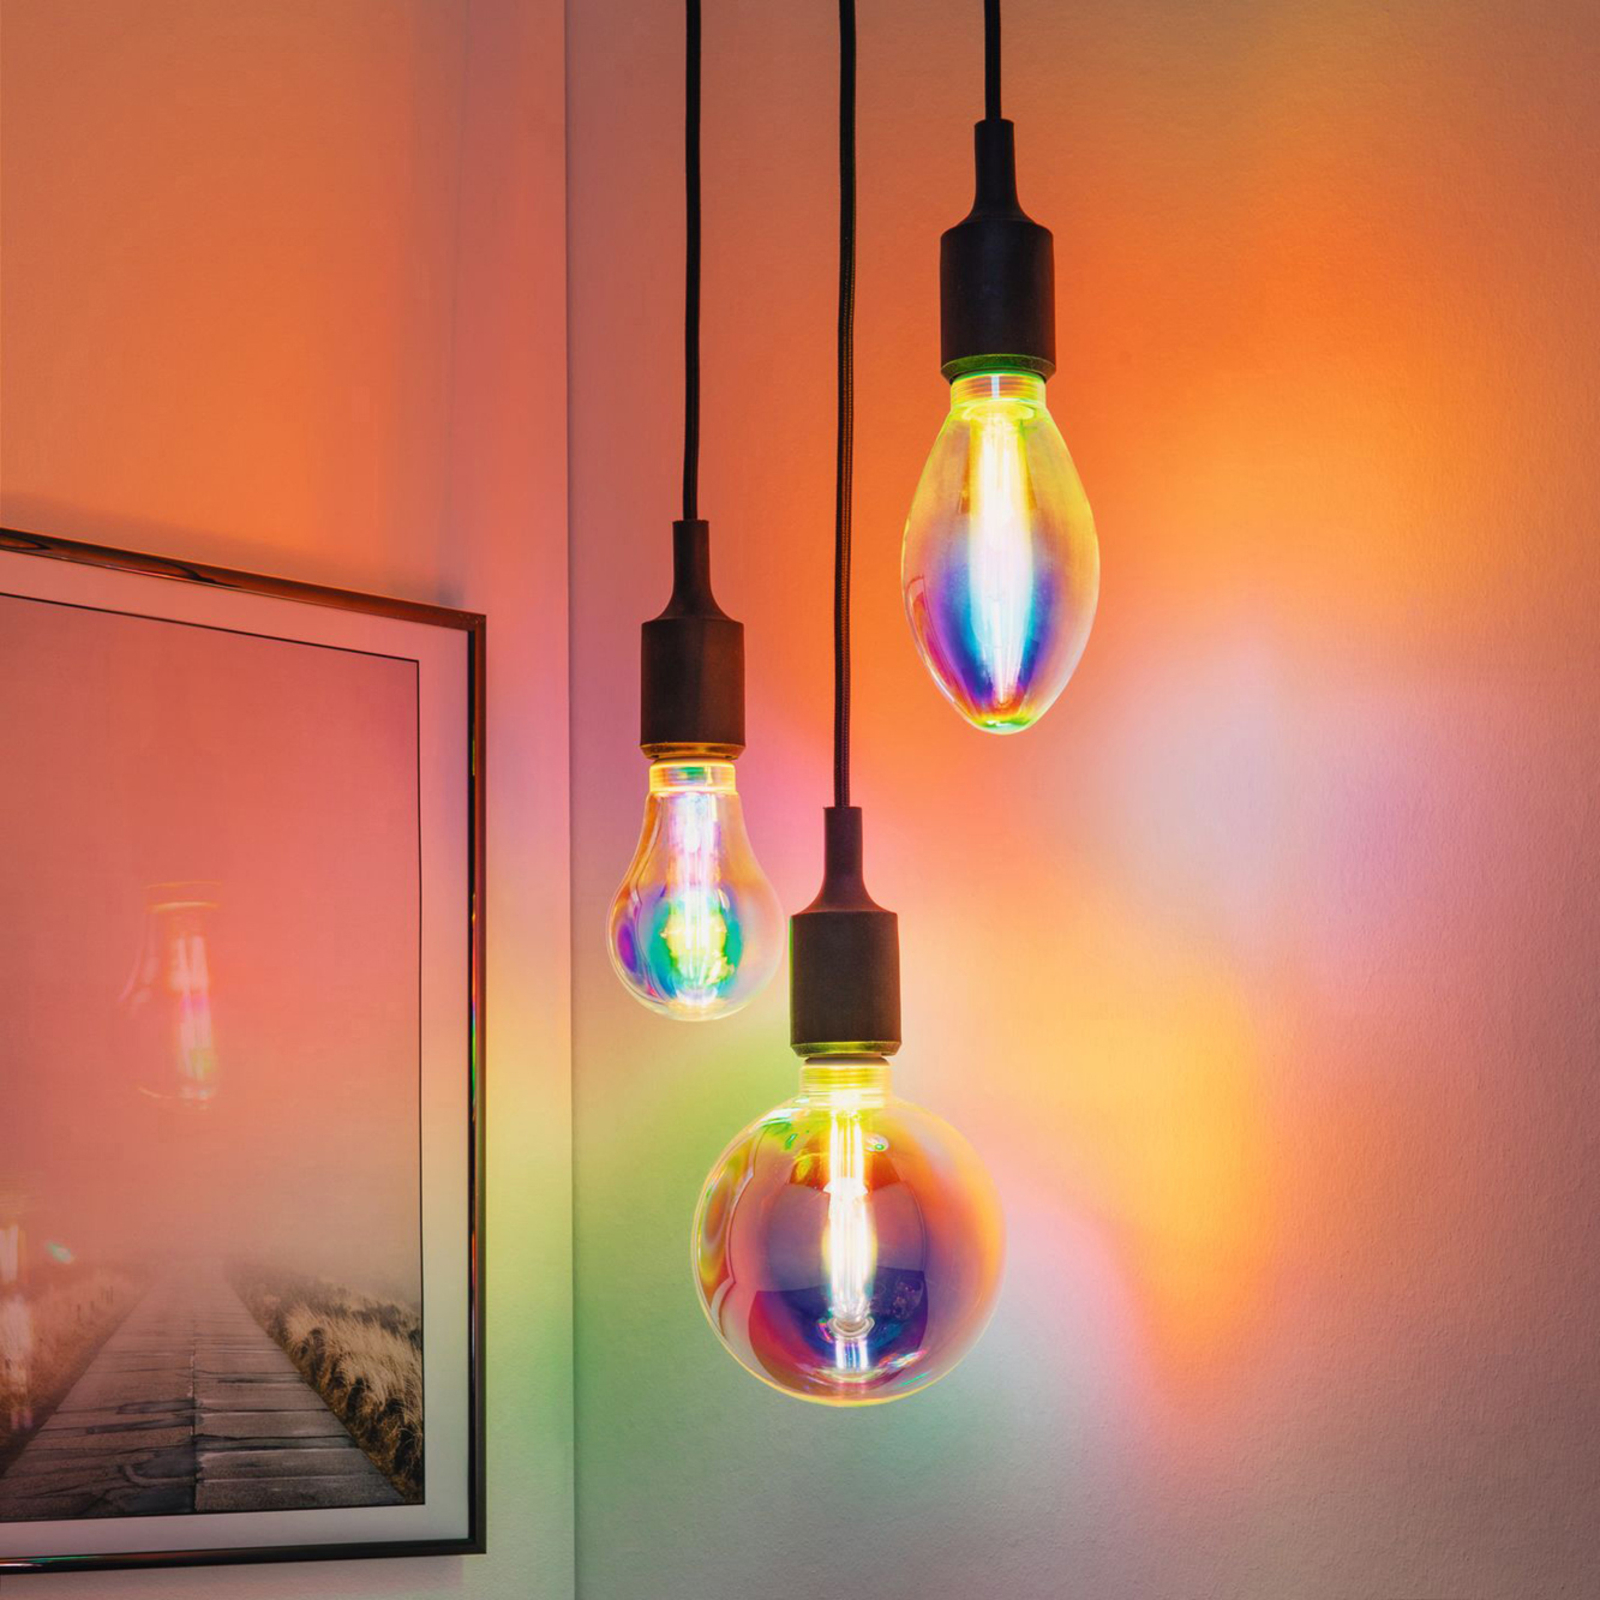 Horen van scherp uitzondering Paulmann LED lamp E27 5W B75 Fantastic Colors | Lampen24.be